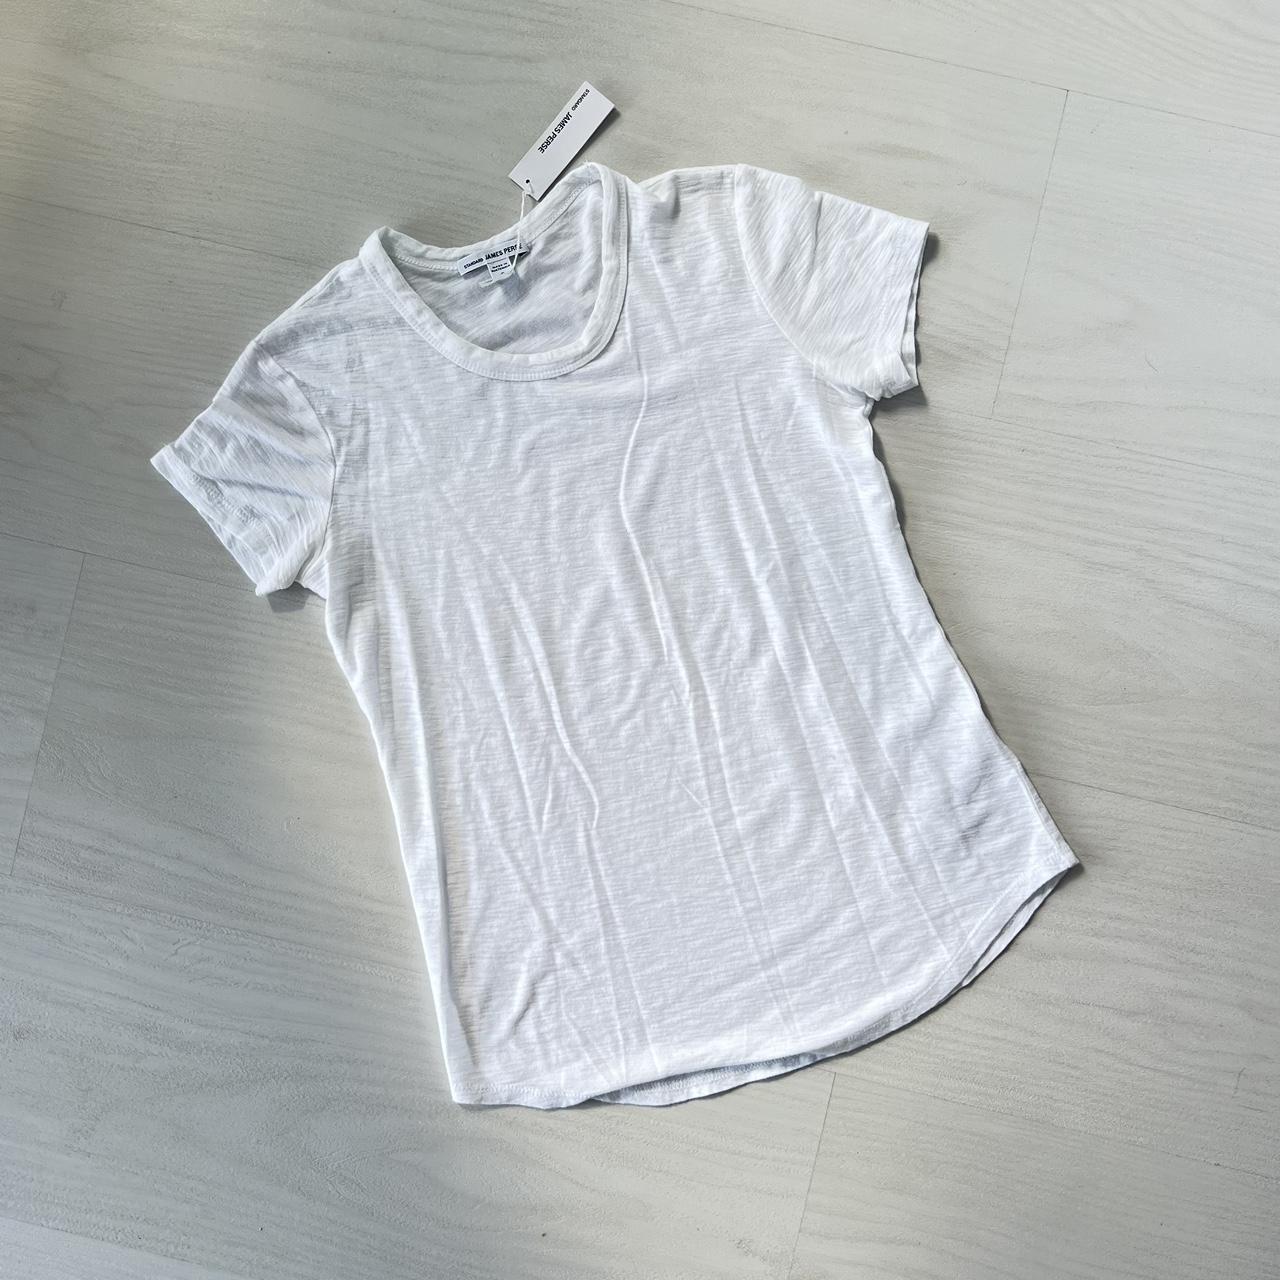 James Perse Women's White T-shirt